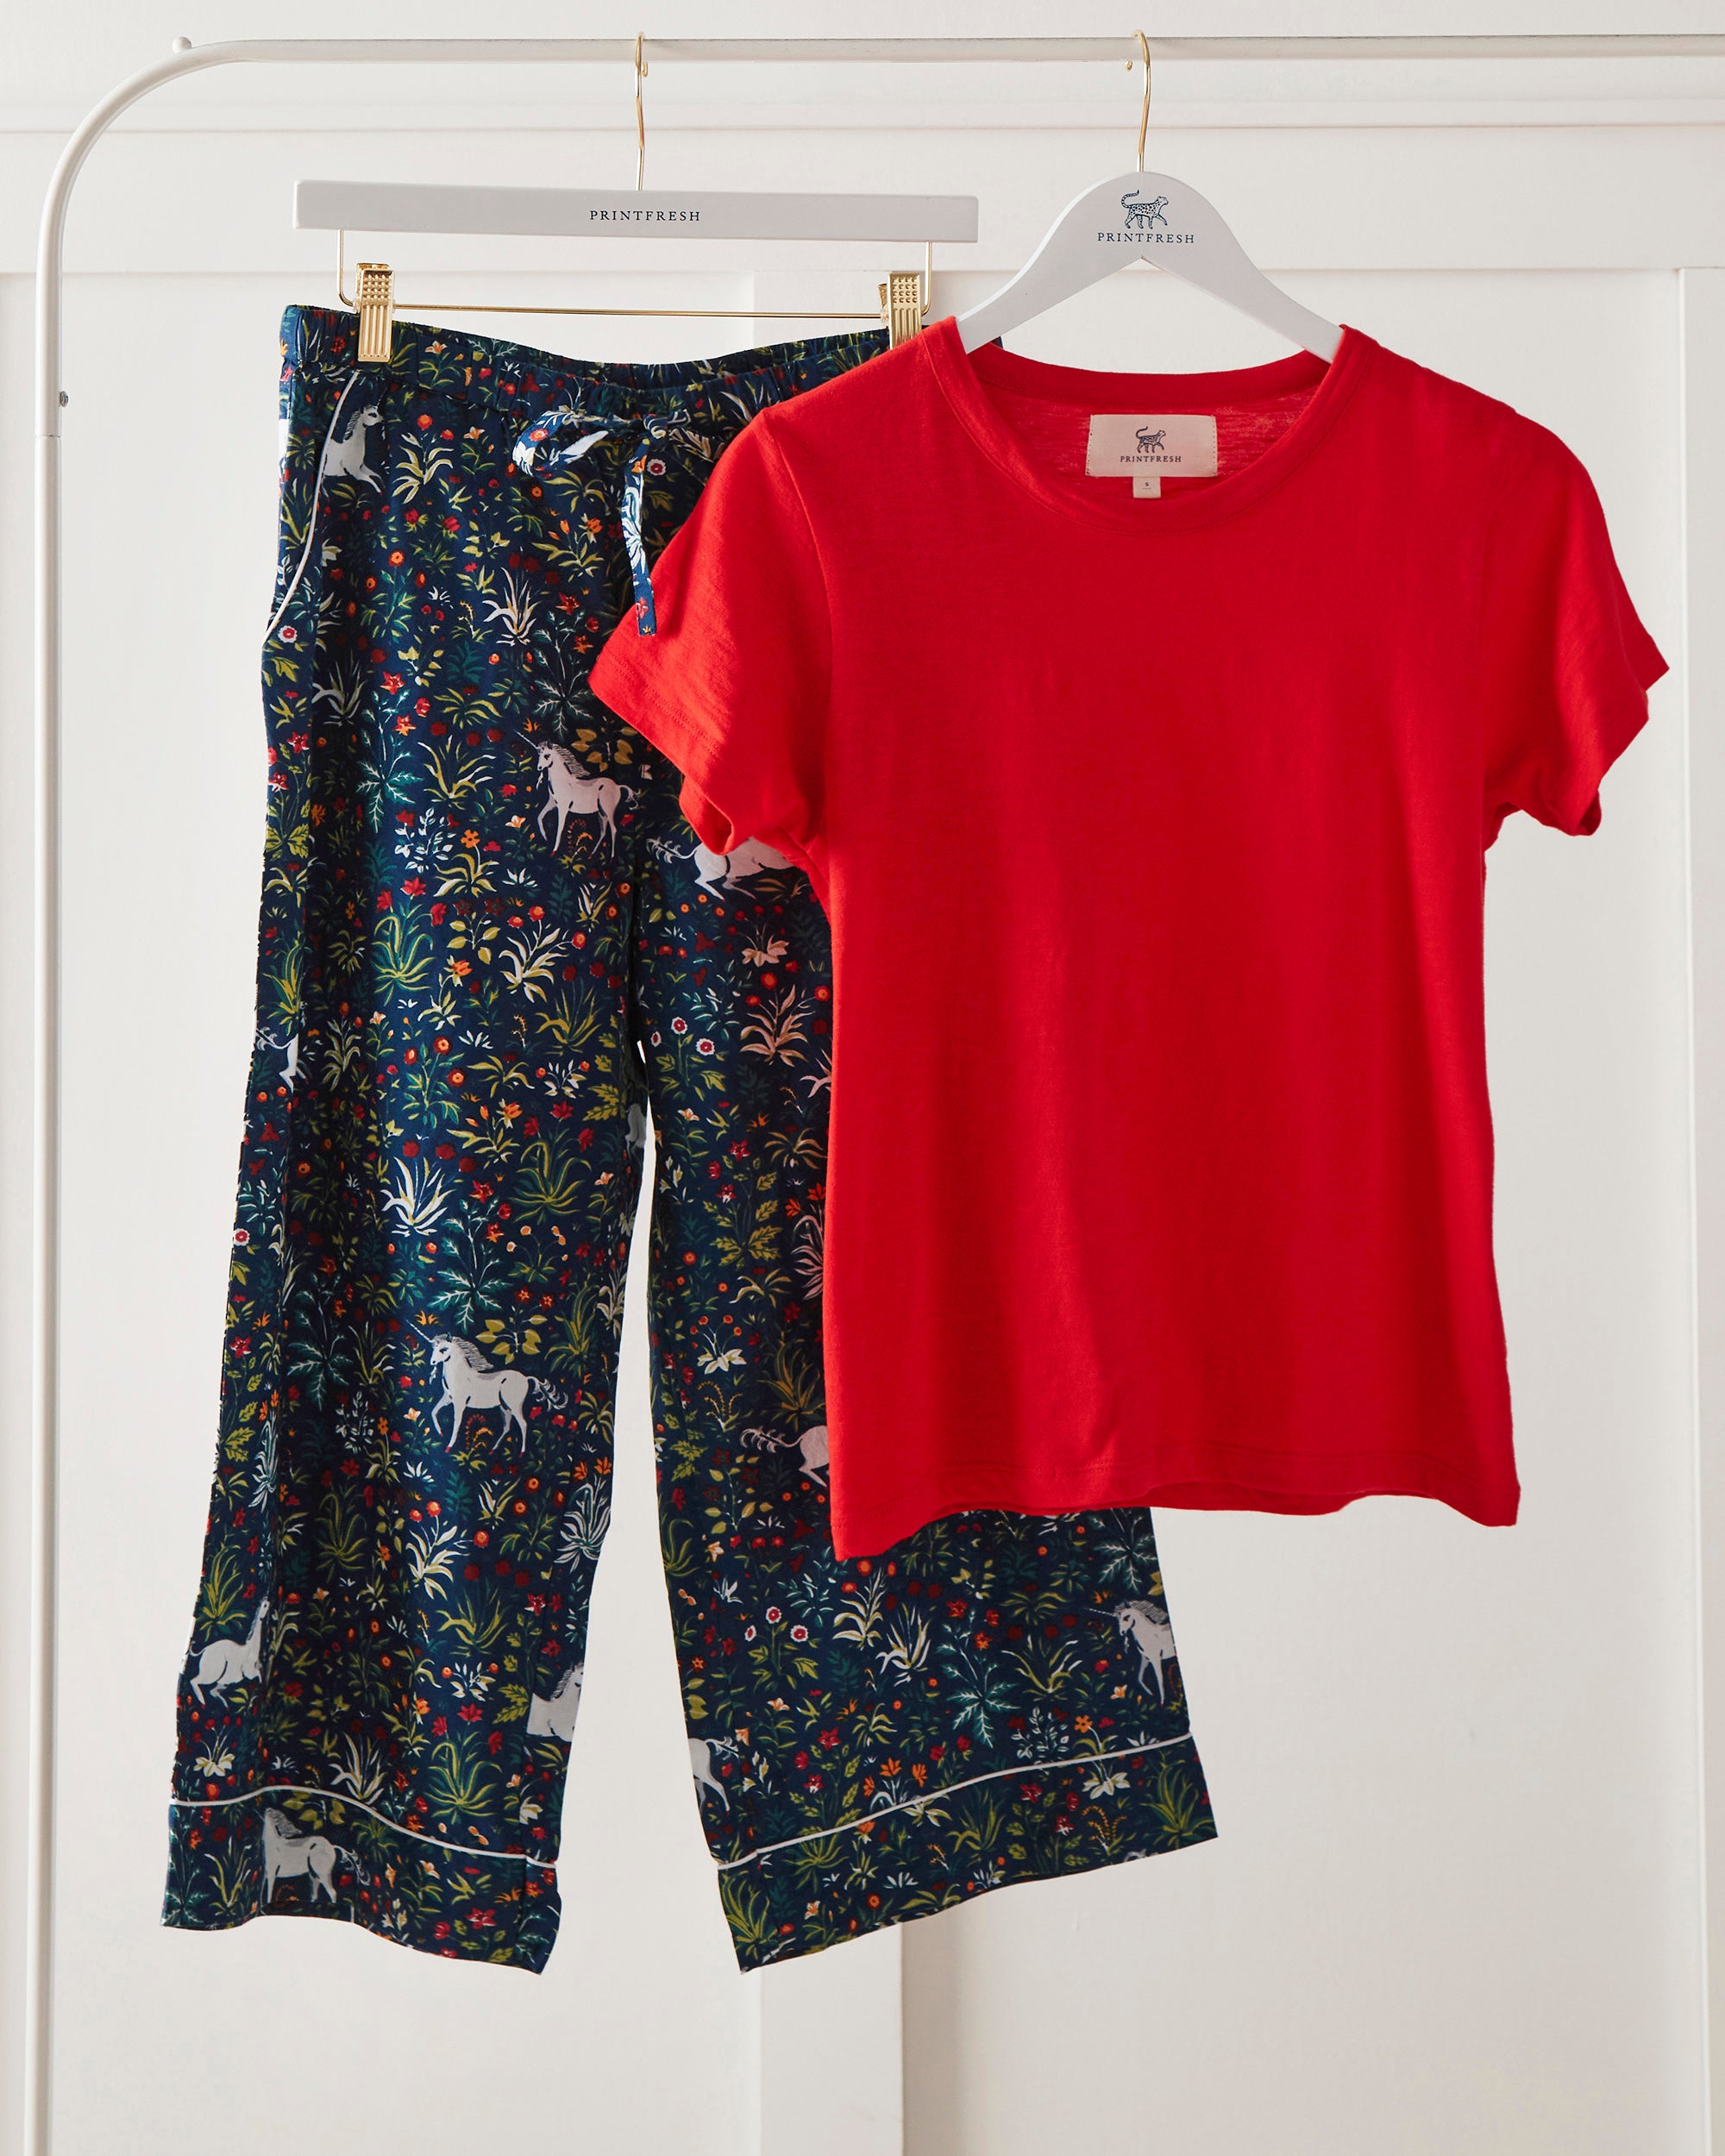 Unicorn's Garden - T-Shirt and Cropped Pajama Pants Bundle - Indigo/Red Lip - Printfresh